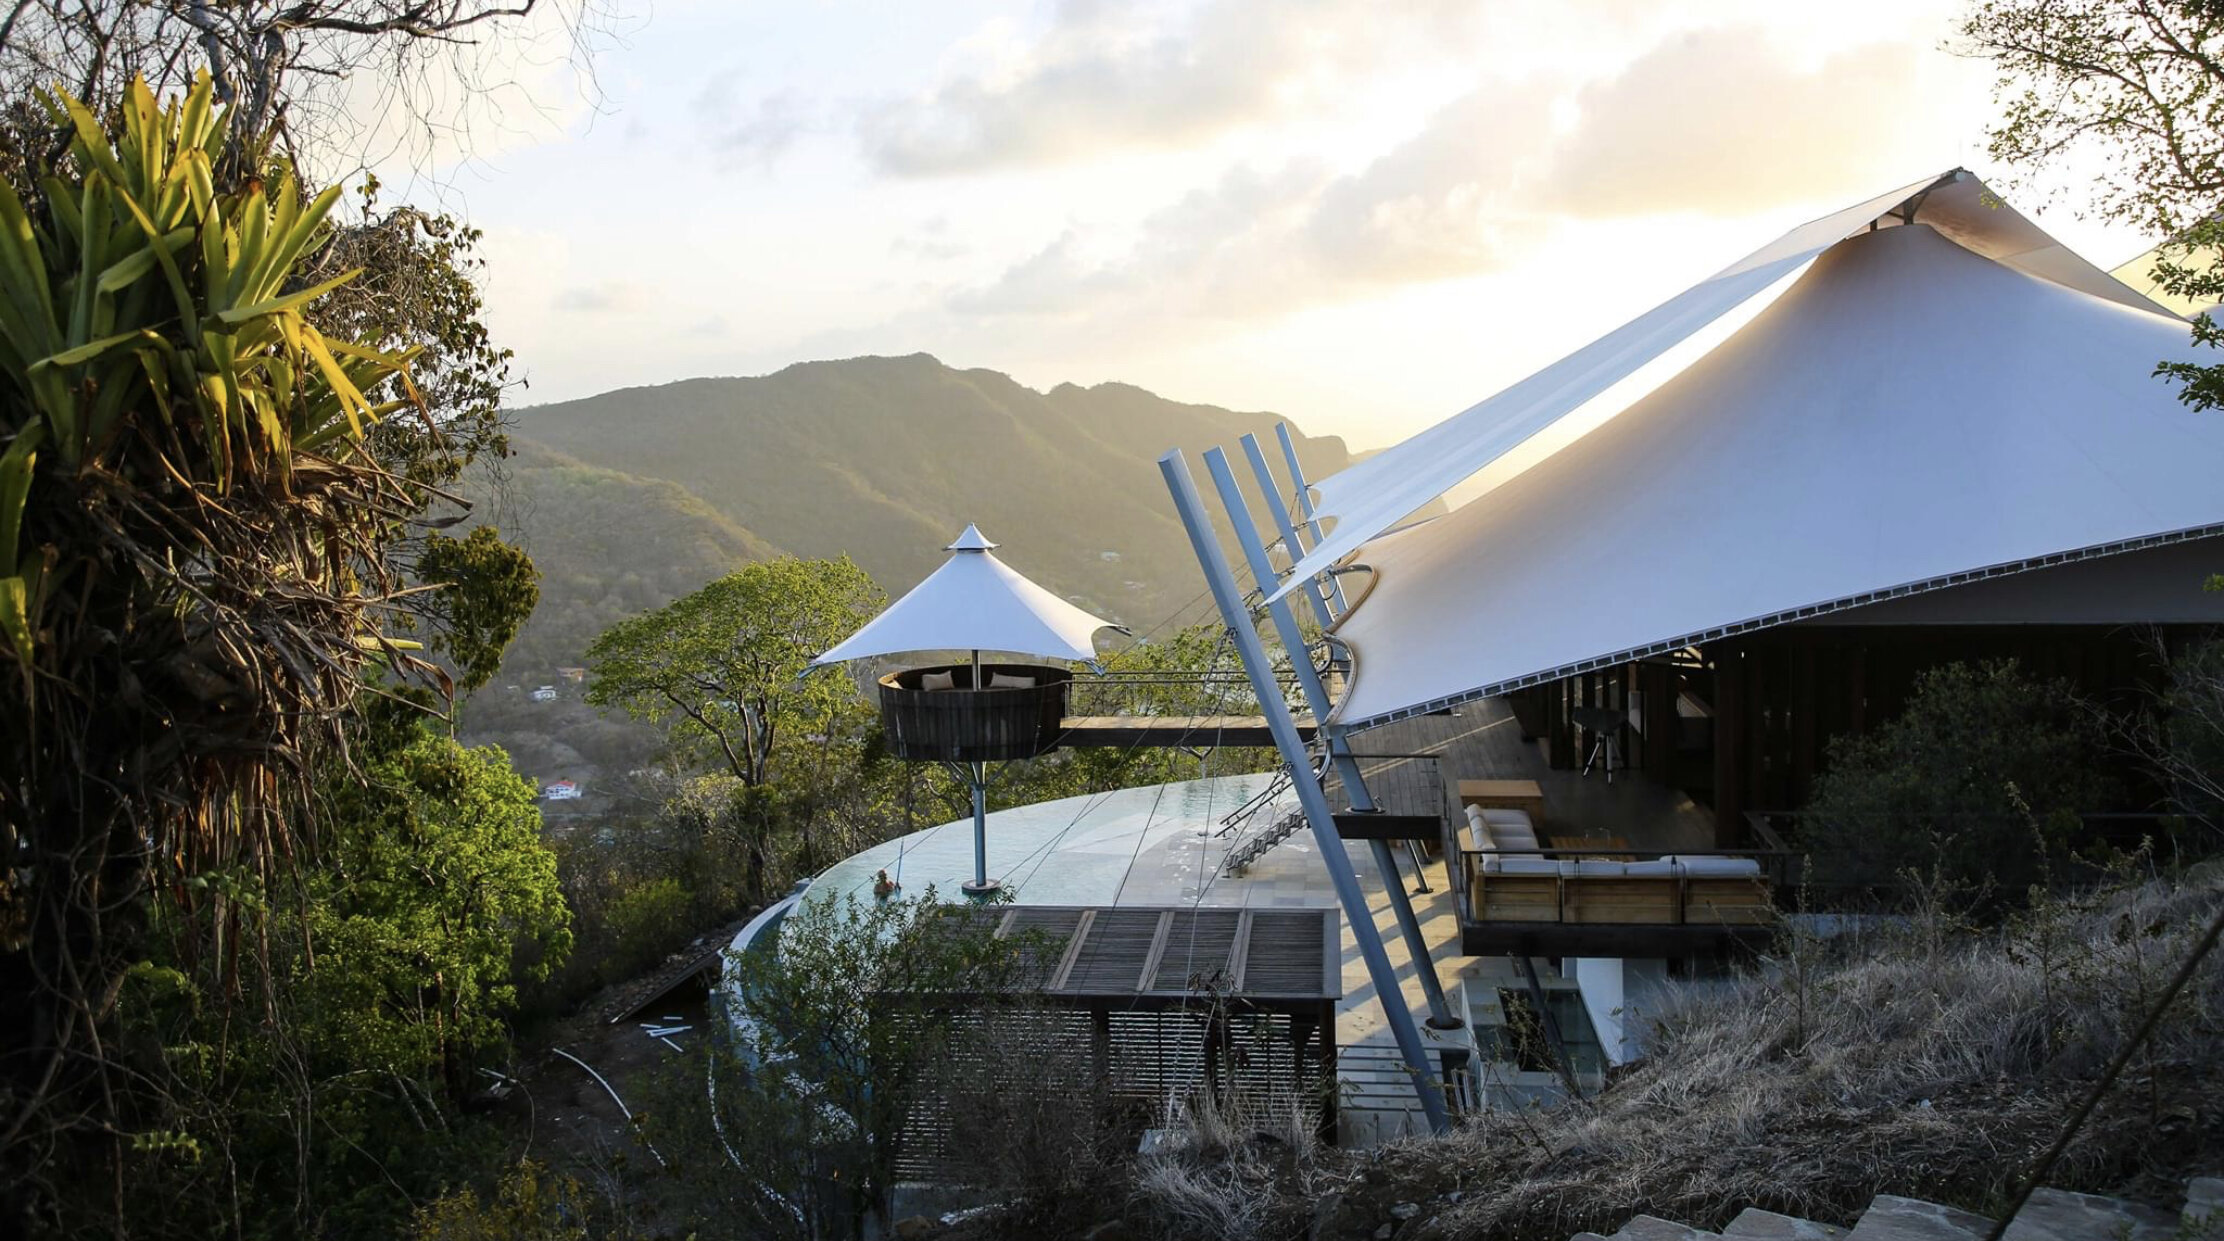 S.E.A.-Studio-Environmental-Architecture-David-Hertz-FAIA-Sail-House-Cloud9-Bequia-Saint-Vincent-Grenadines-Caribbean-Island-sustainable-regenerative-restorative-green-design-hospitality-tropical-resort-hotel-biomimetic-tensile-structure-select-1.JPG